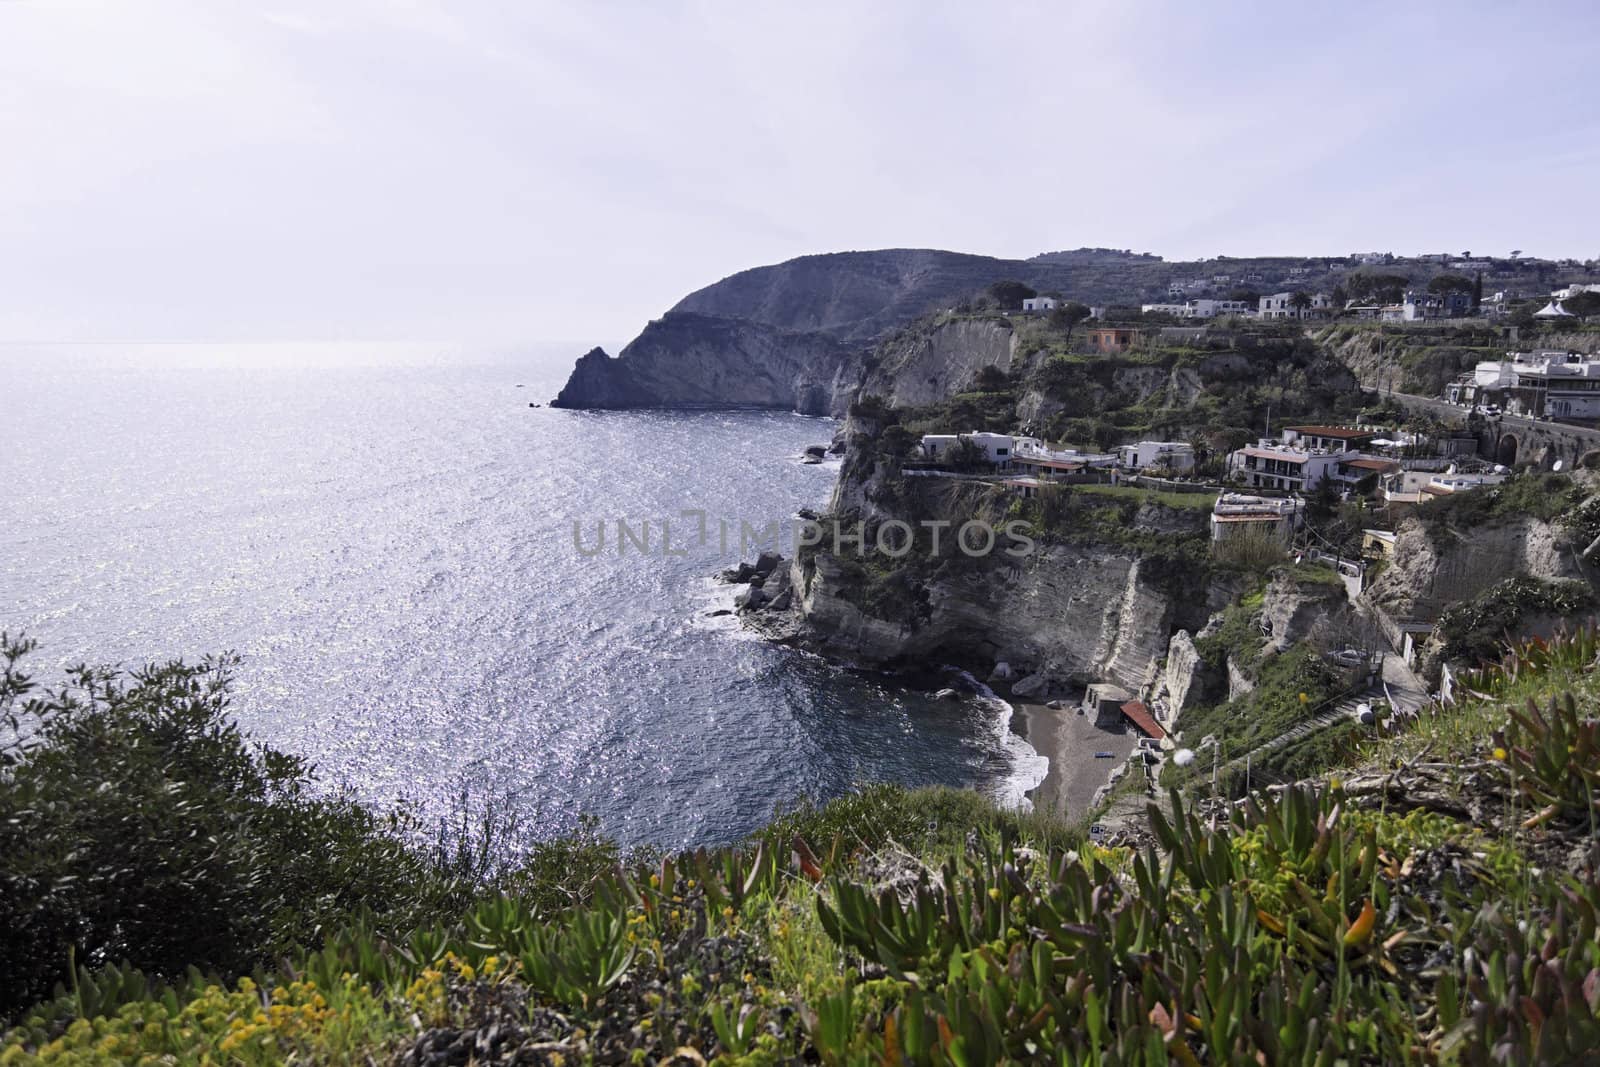 ITALY, Campania, Ischia island, S.Angelo, view of S.Angelo rocky coast by agiampiccolo